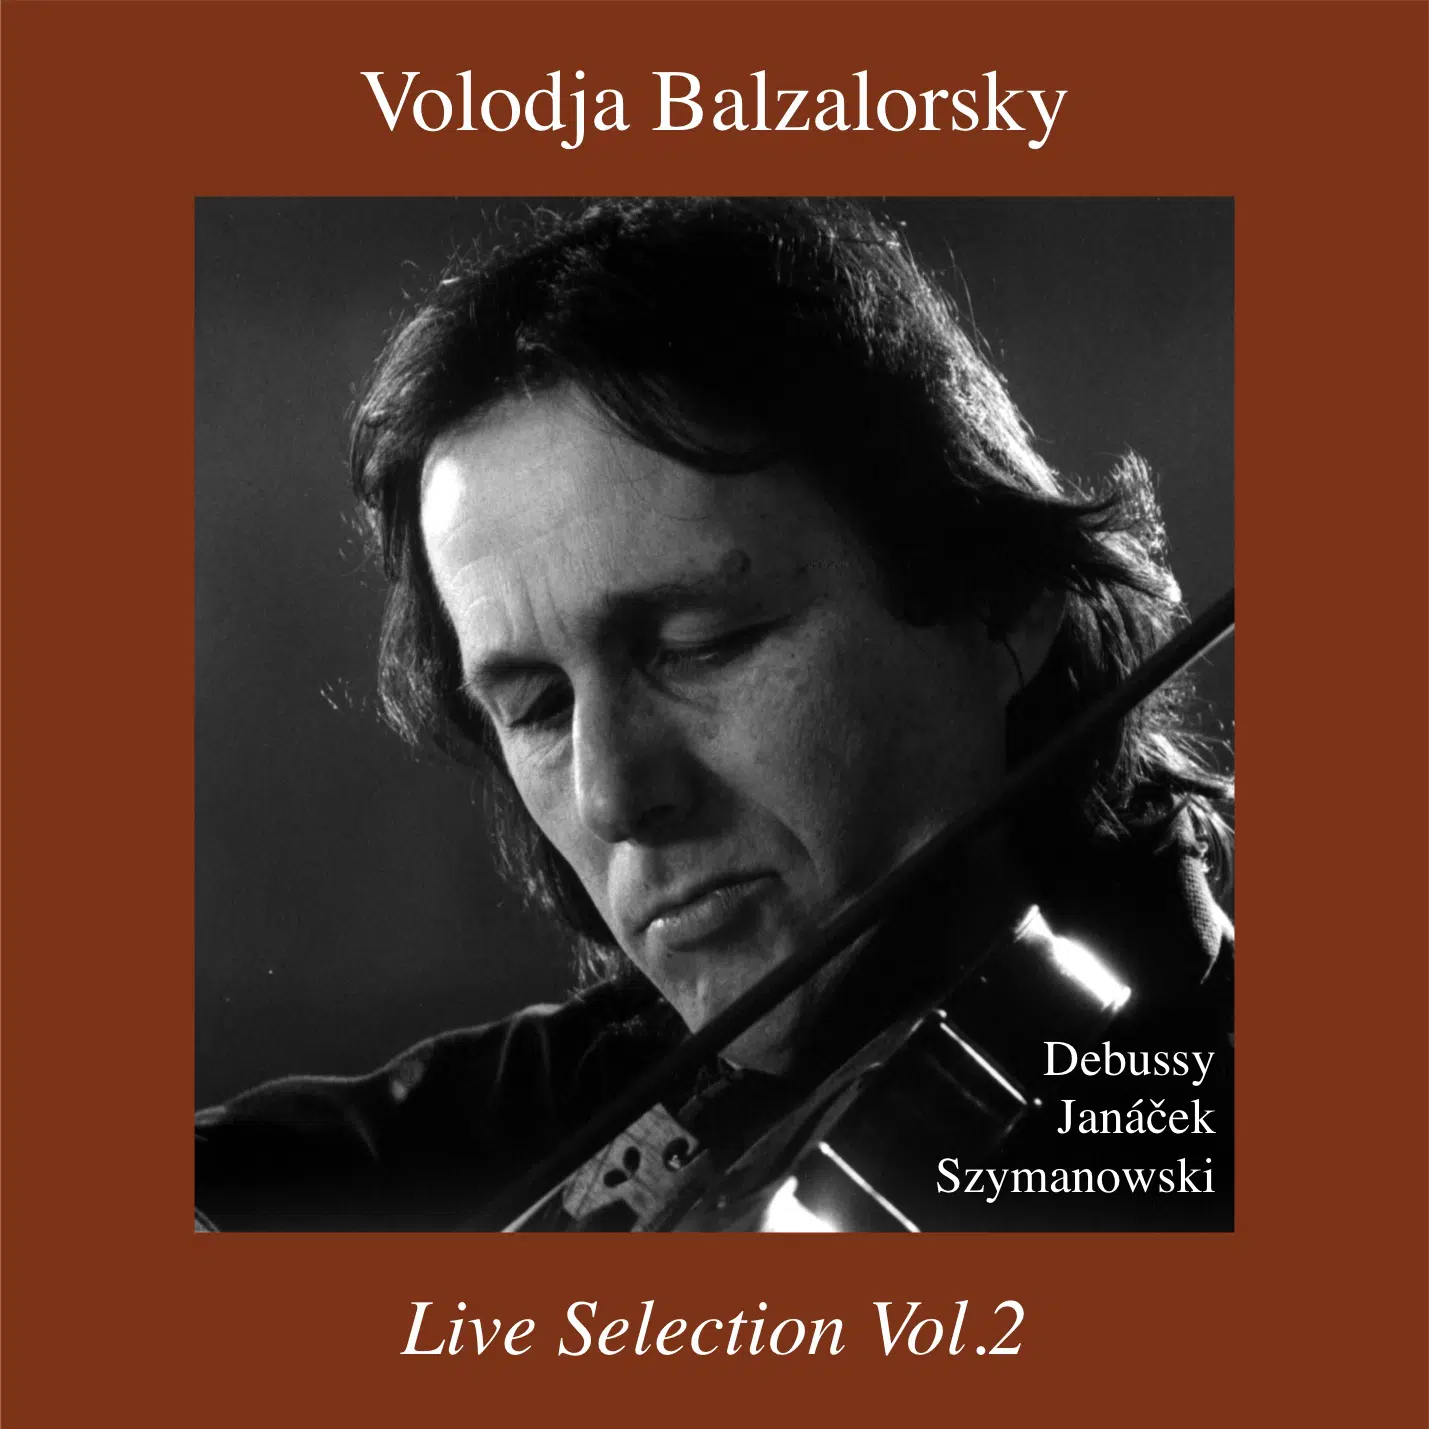 Live Selection No2: New digital album release Debussy, Janacek, Szymanowski: Sonatas for Violin and Piano